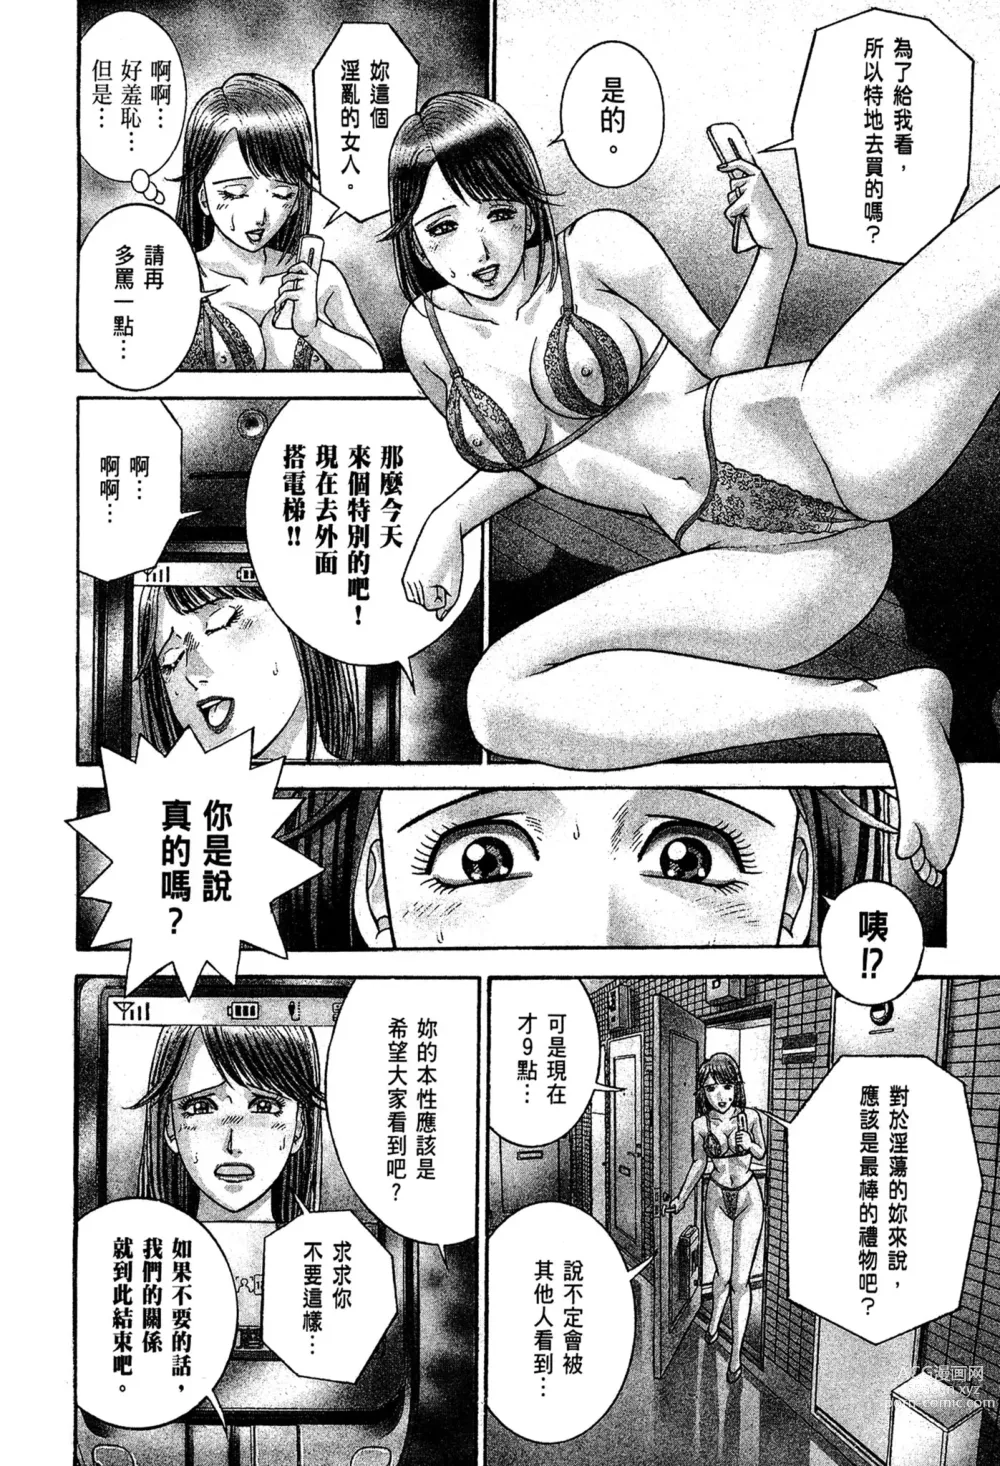 Page 206 of manga 現代美人妻圖鑑